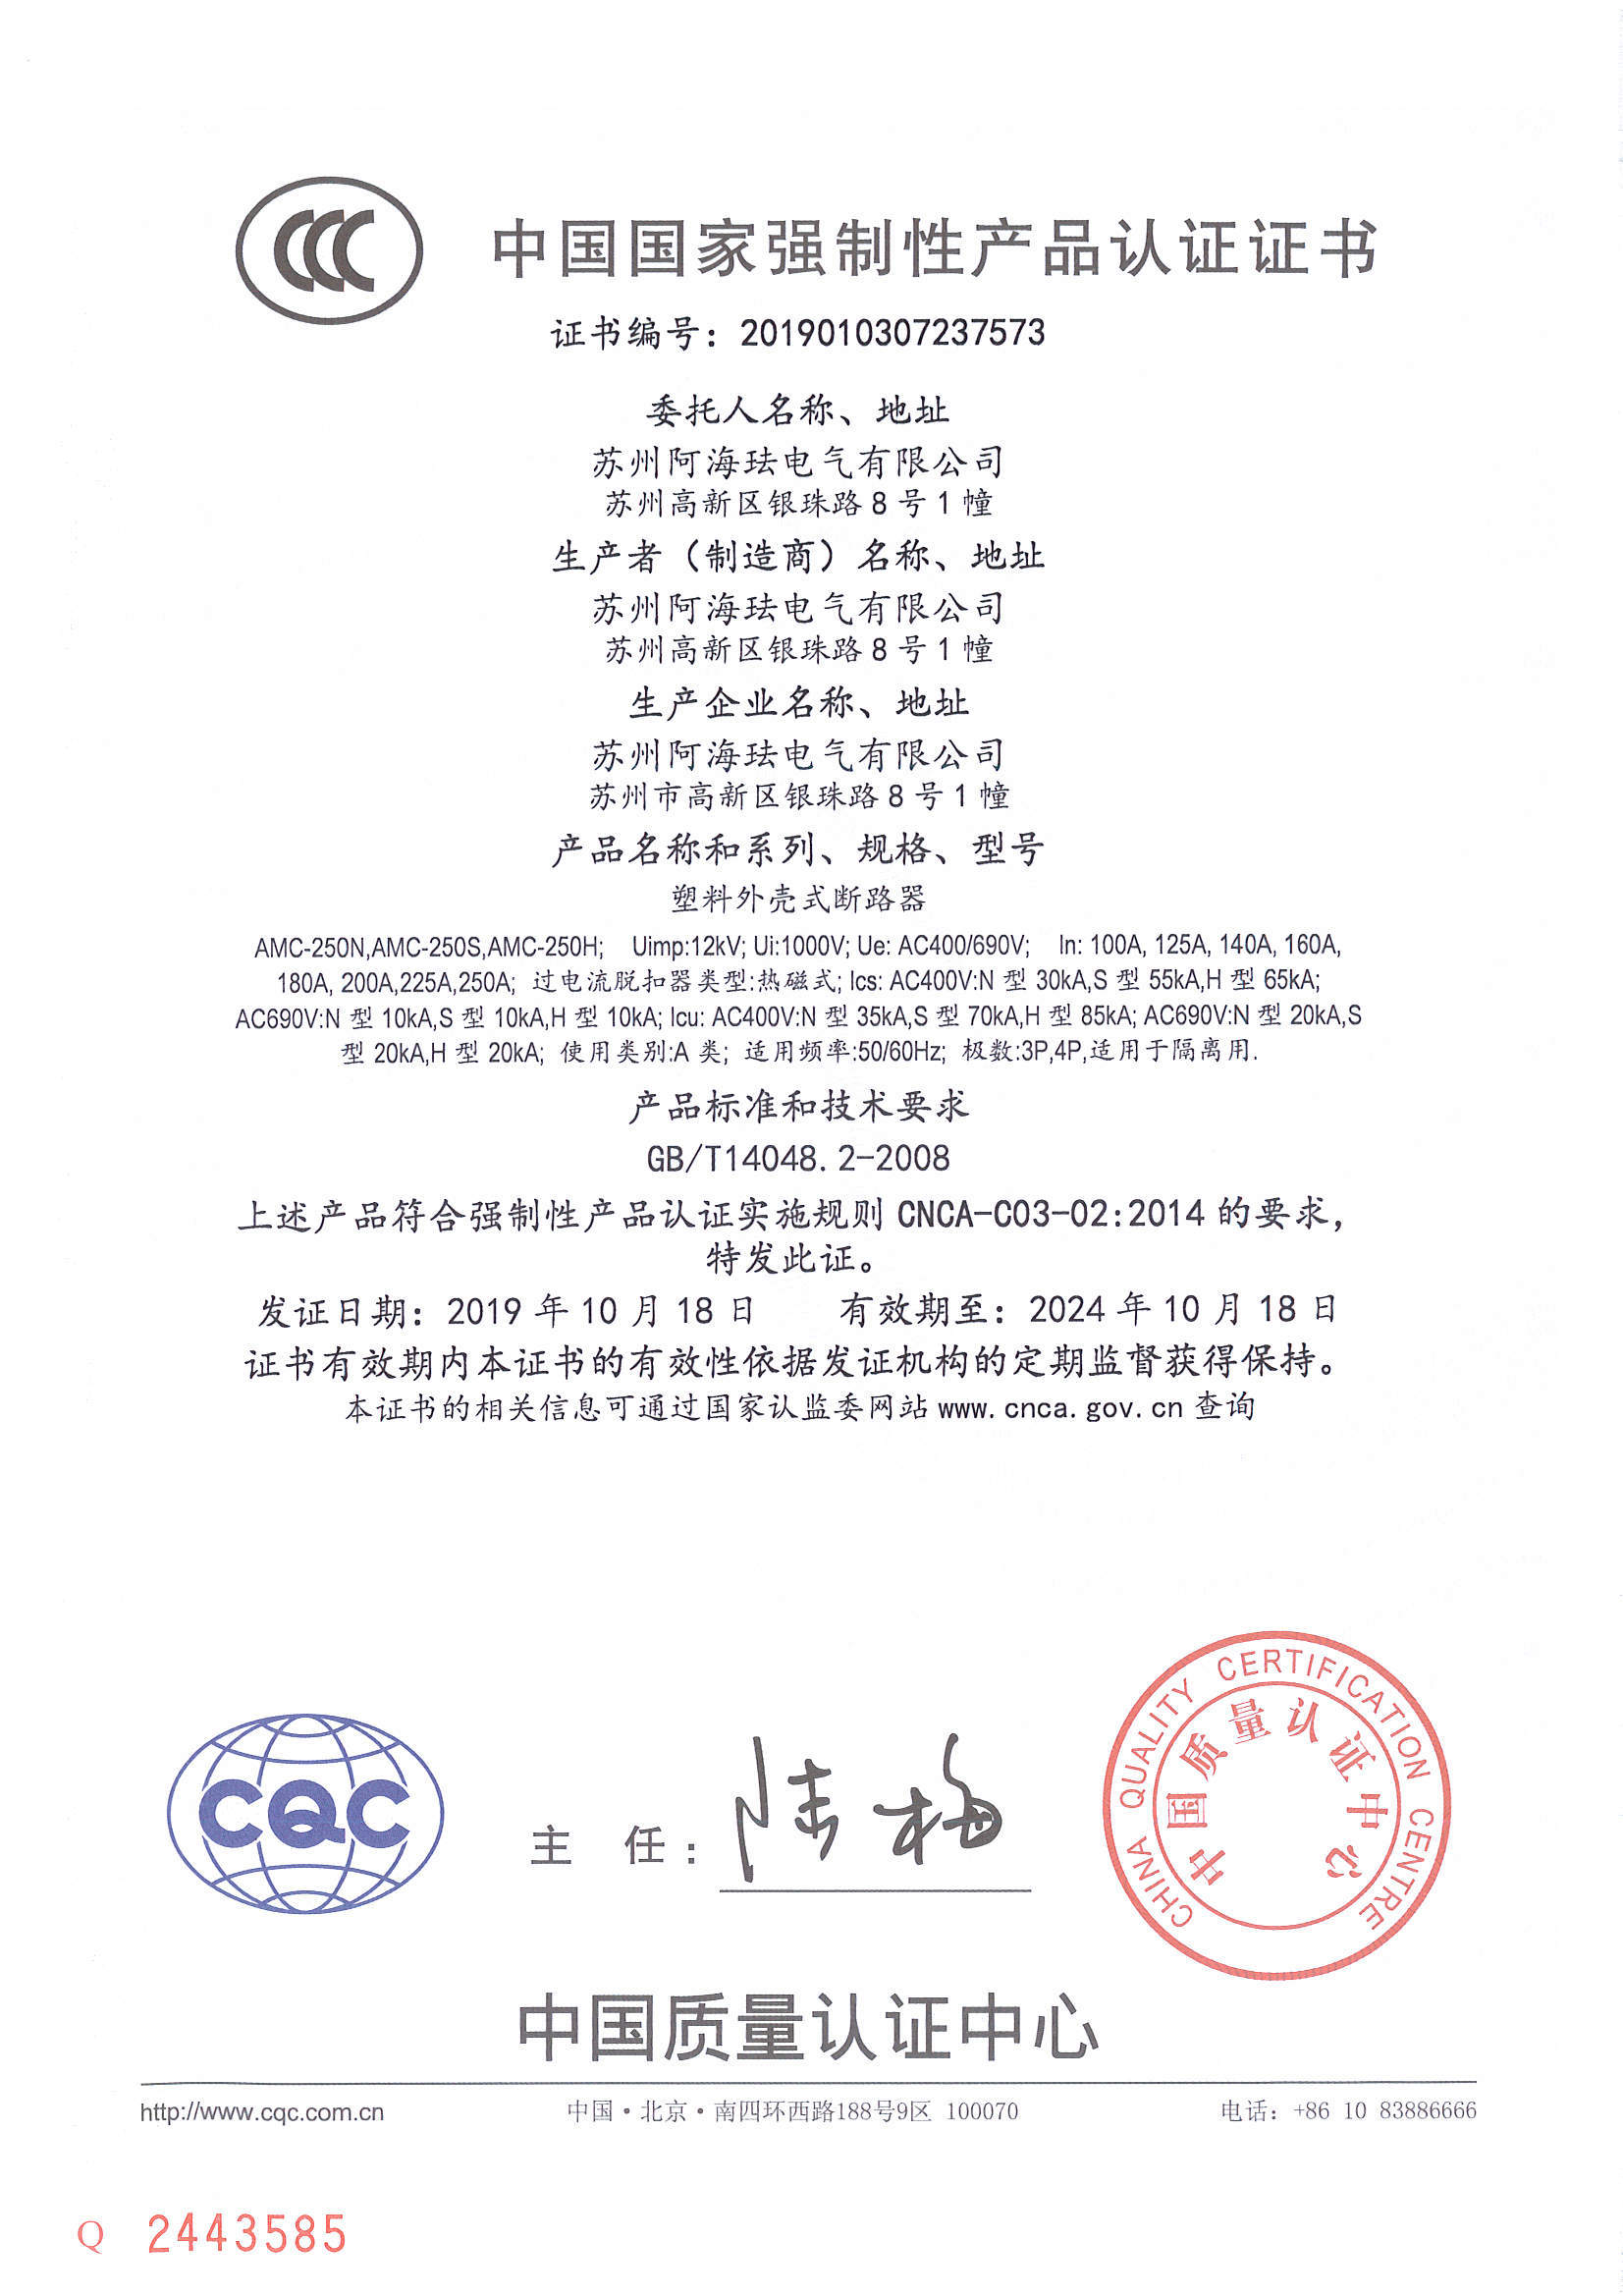 AMC250 CCC certificate